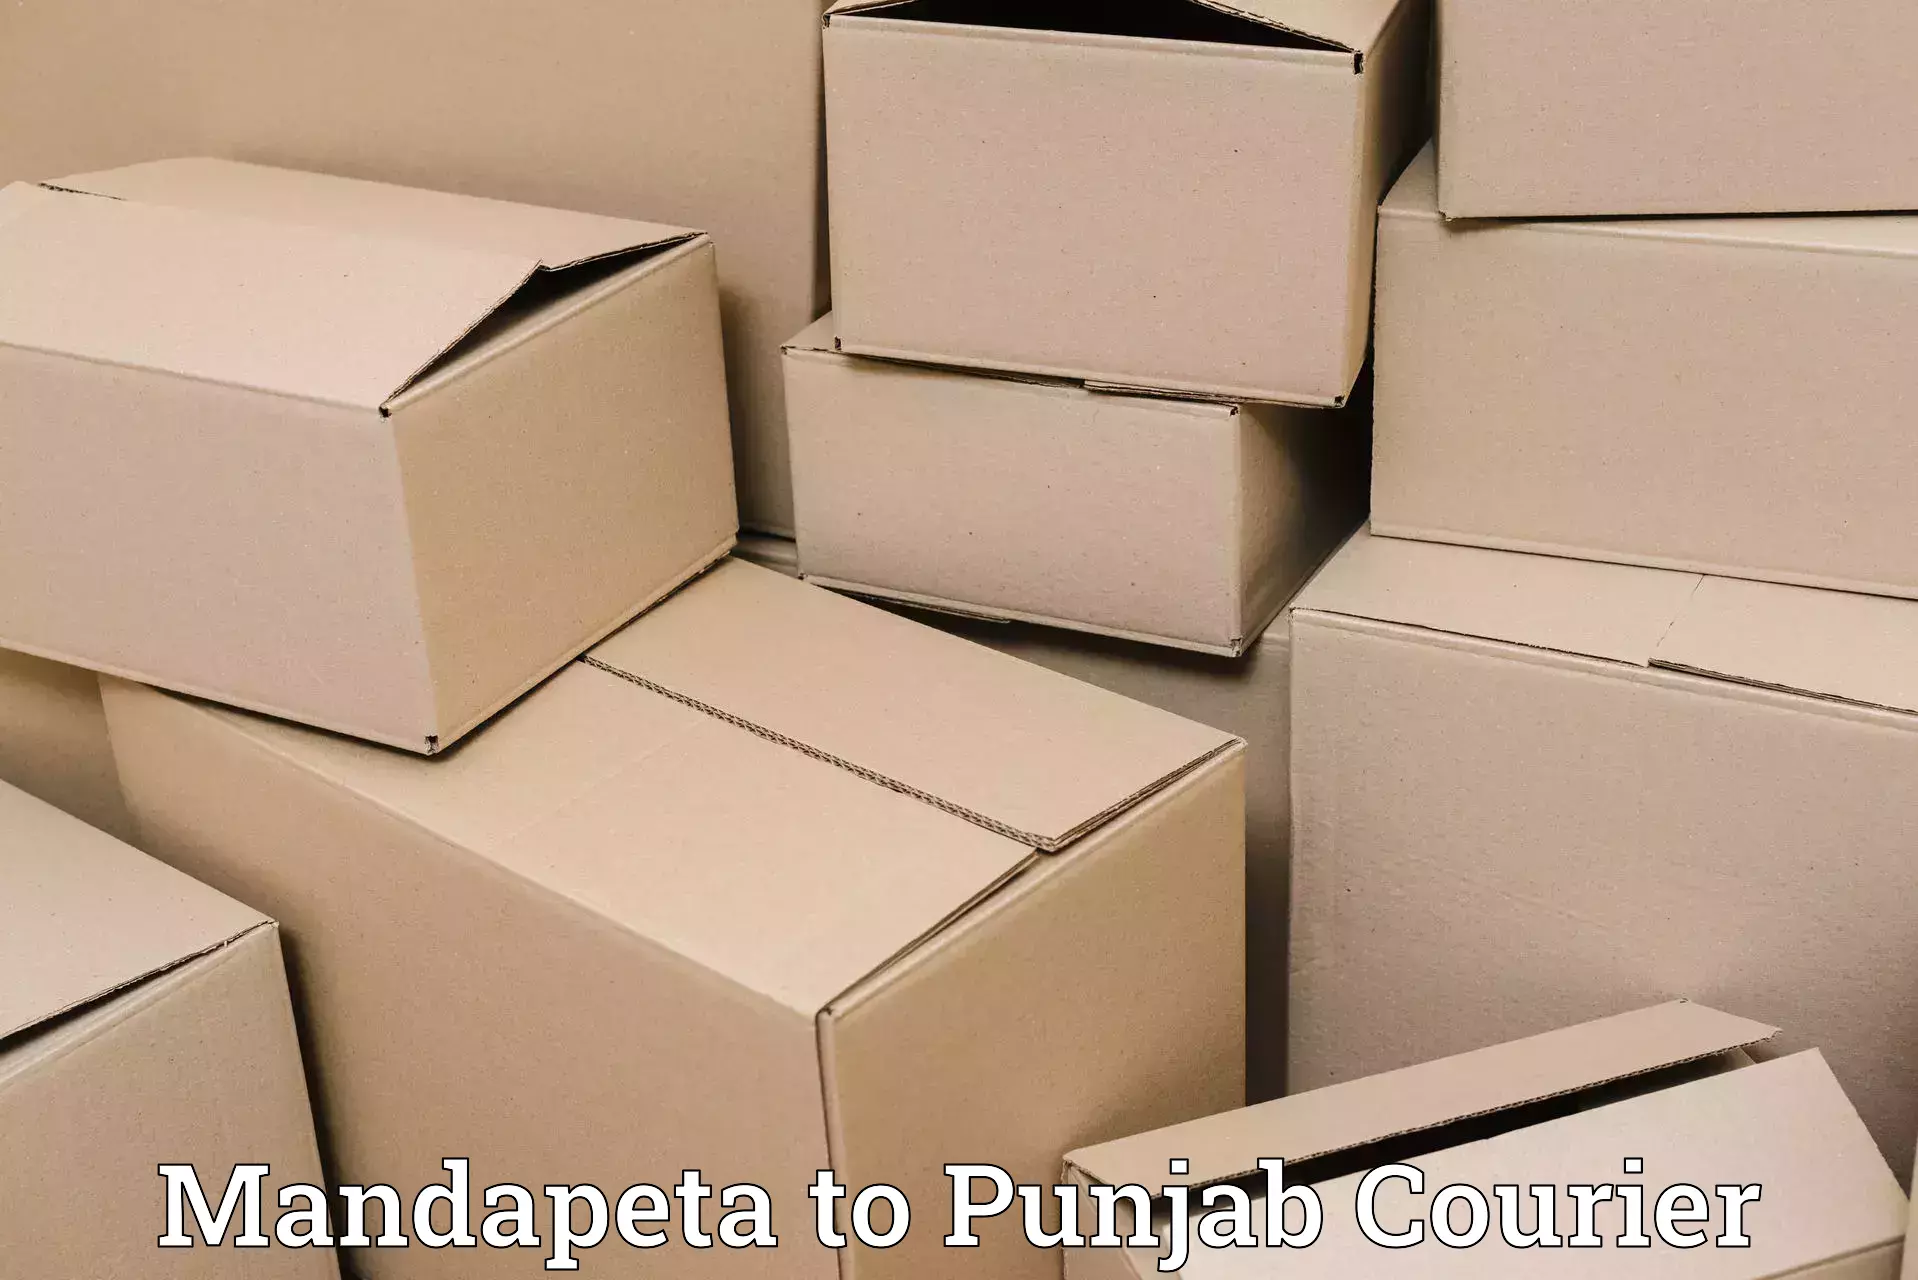 Ground shipping Mandapeta to Punjab